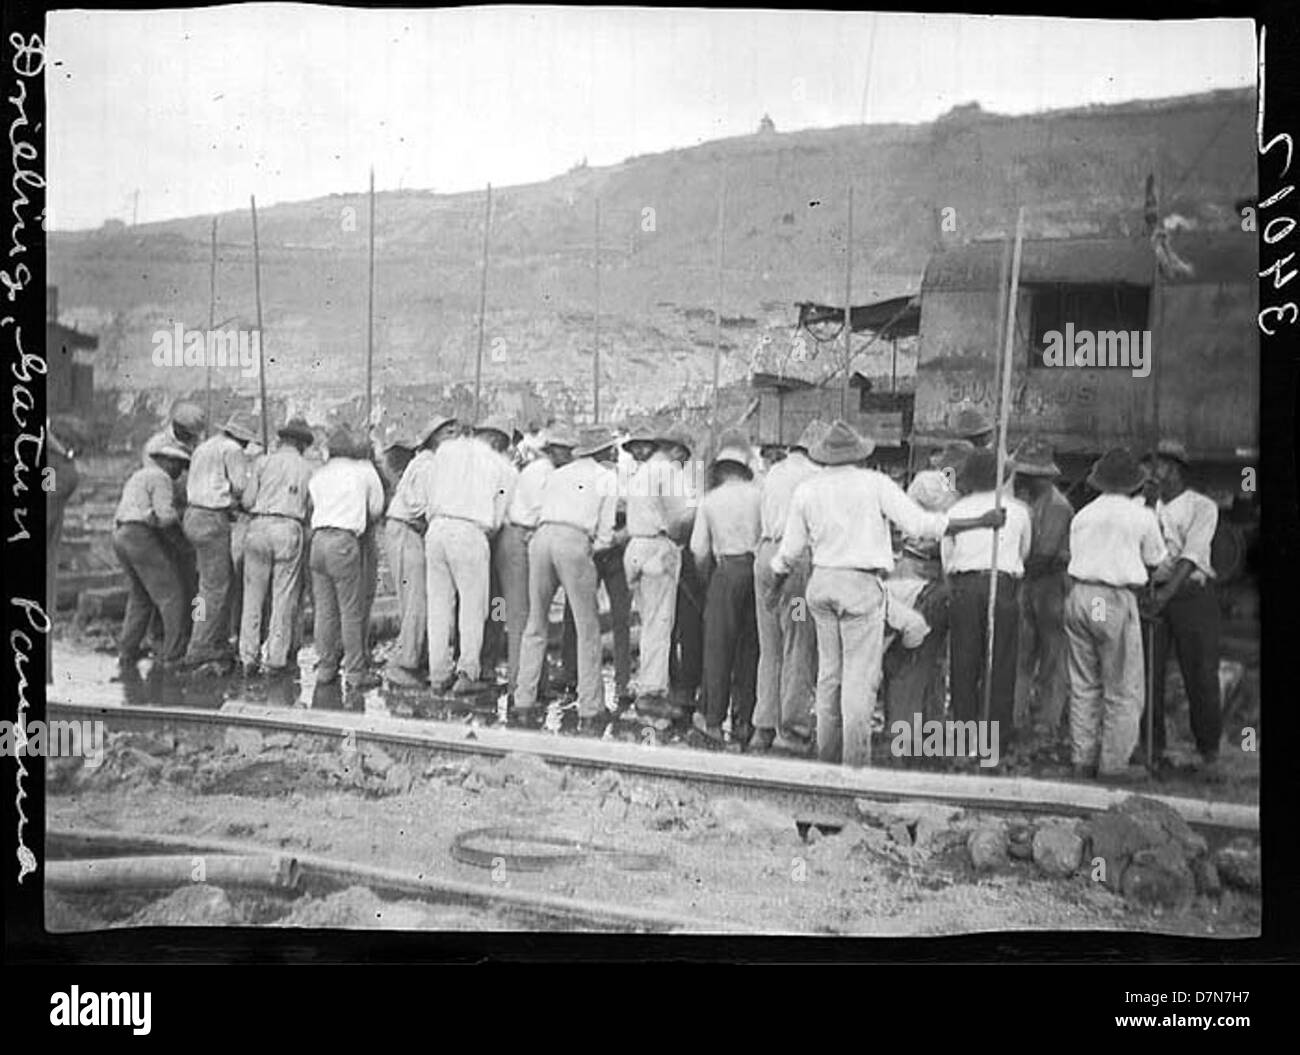 Line of men drilling Stock Photo